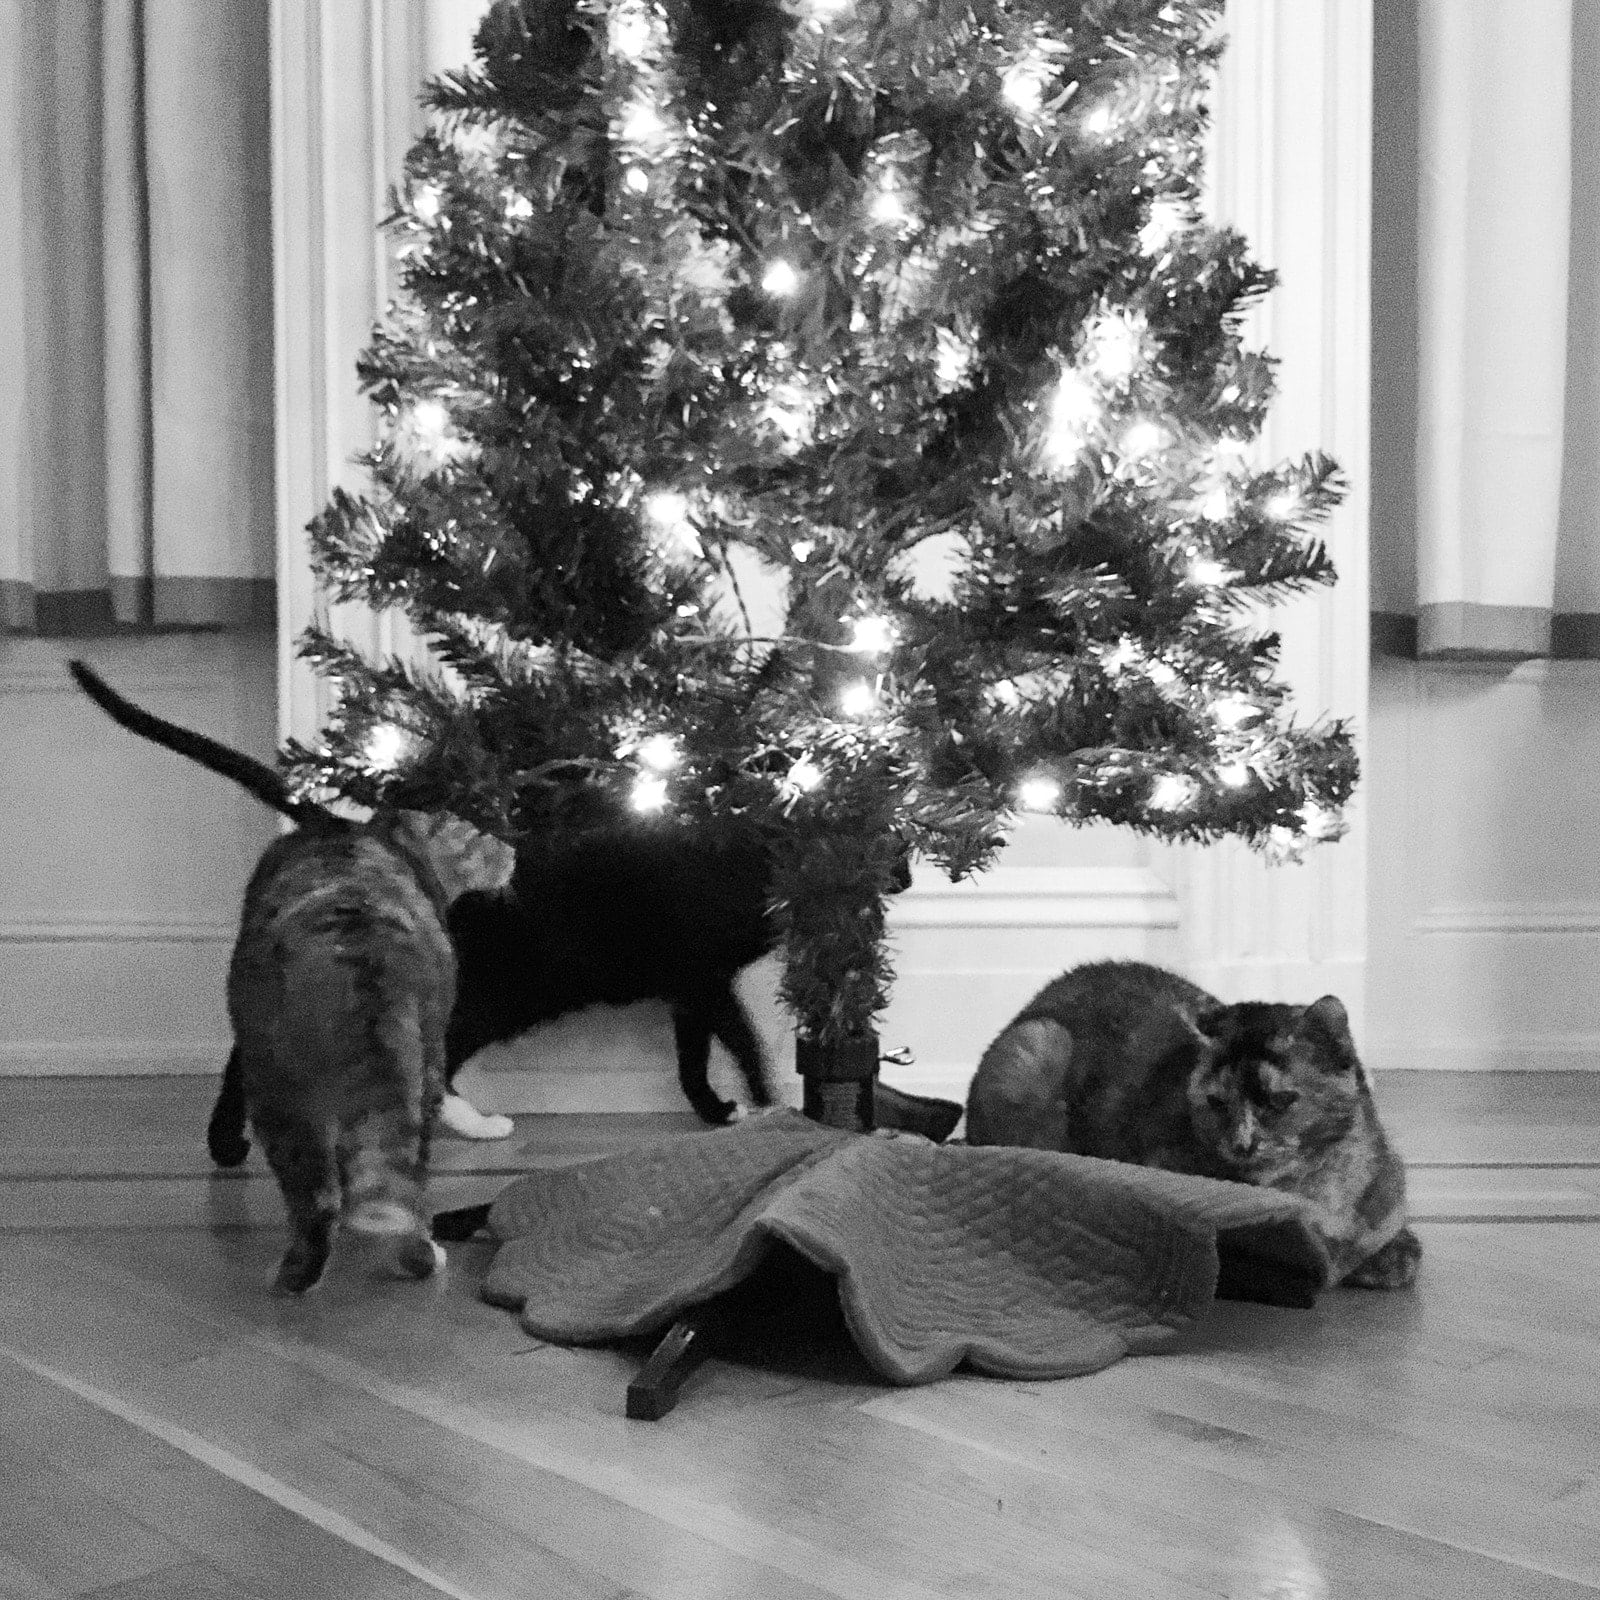 Leela under the Christmas tree